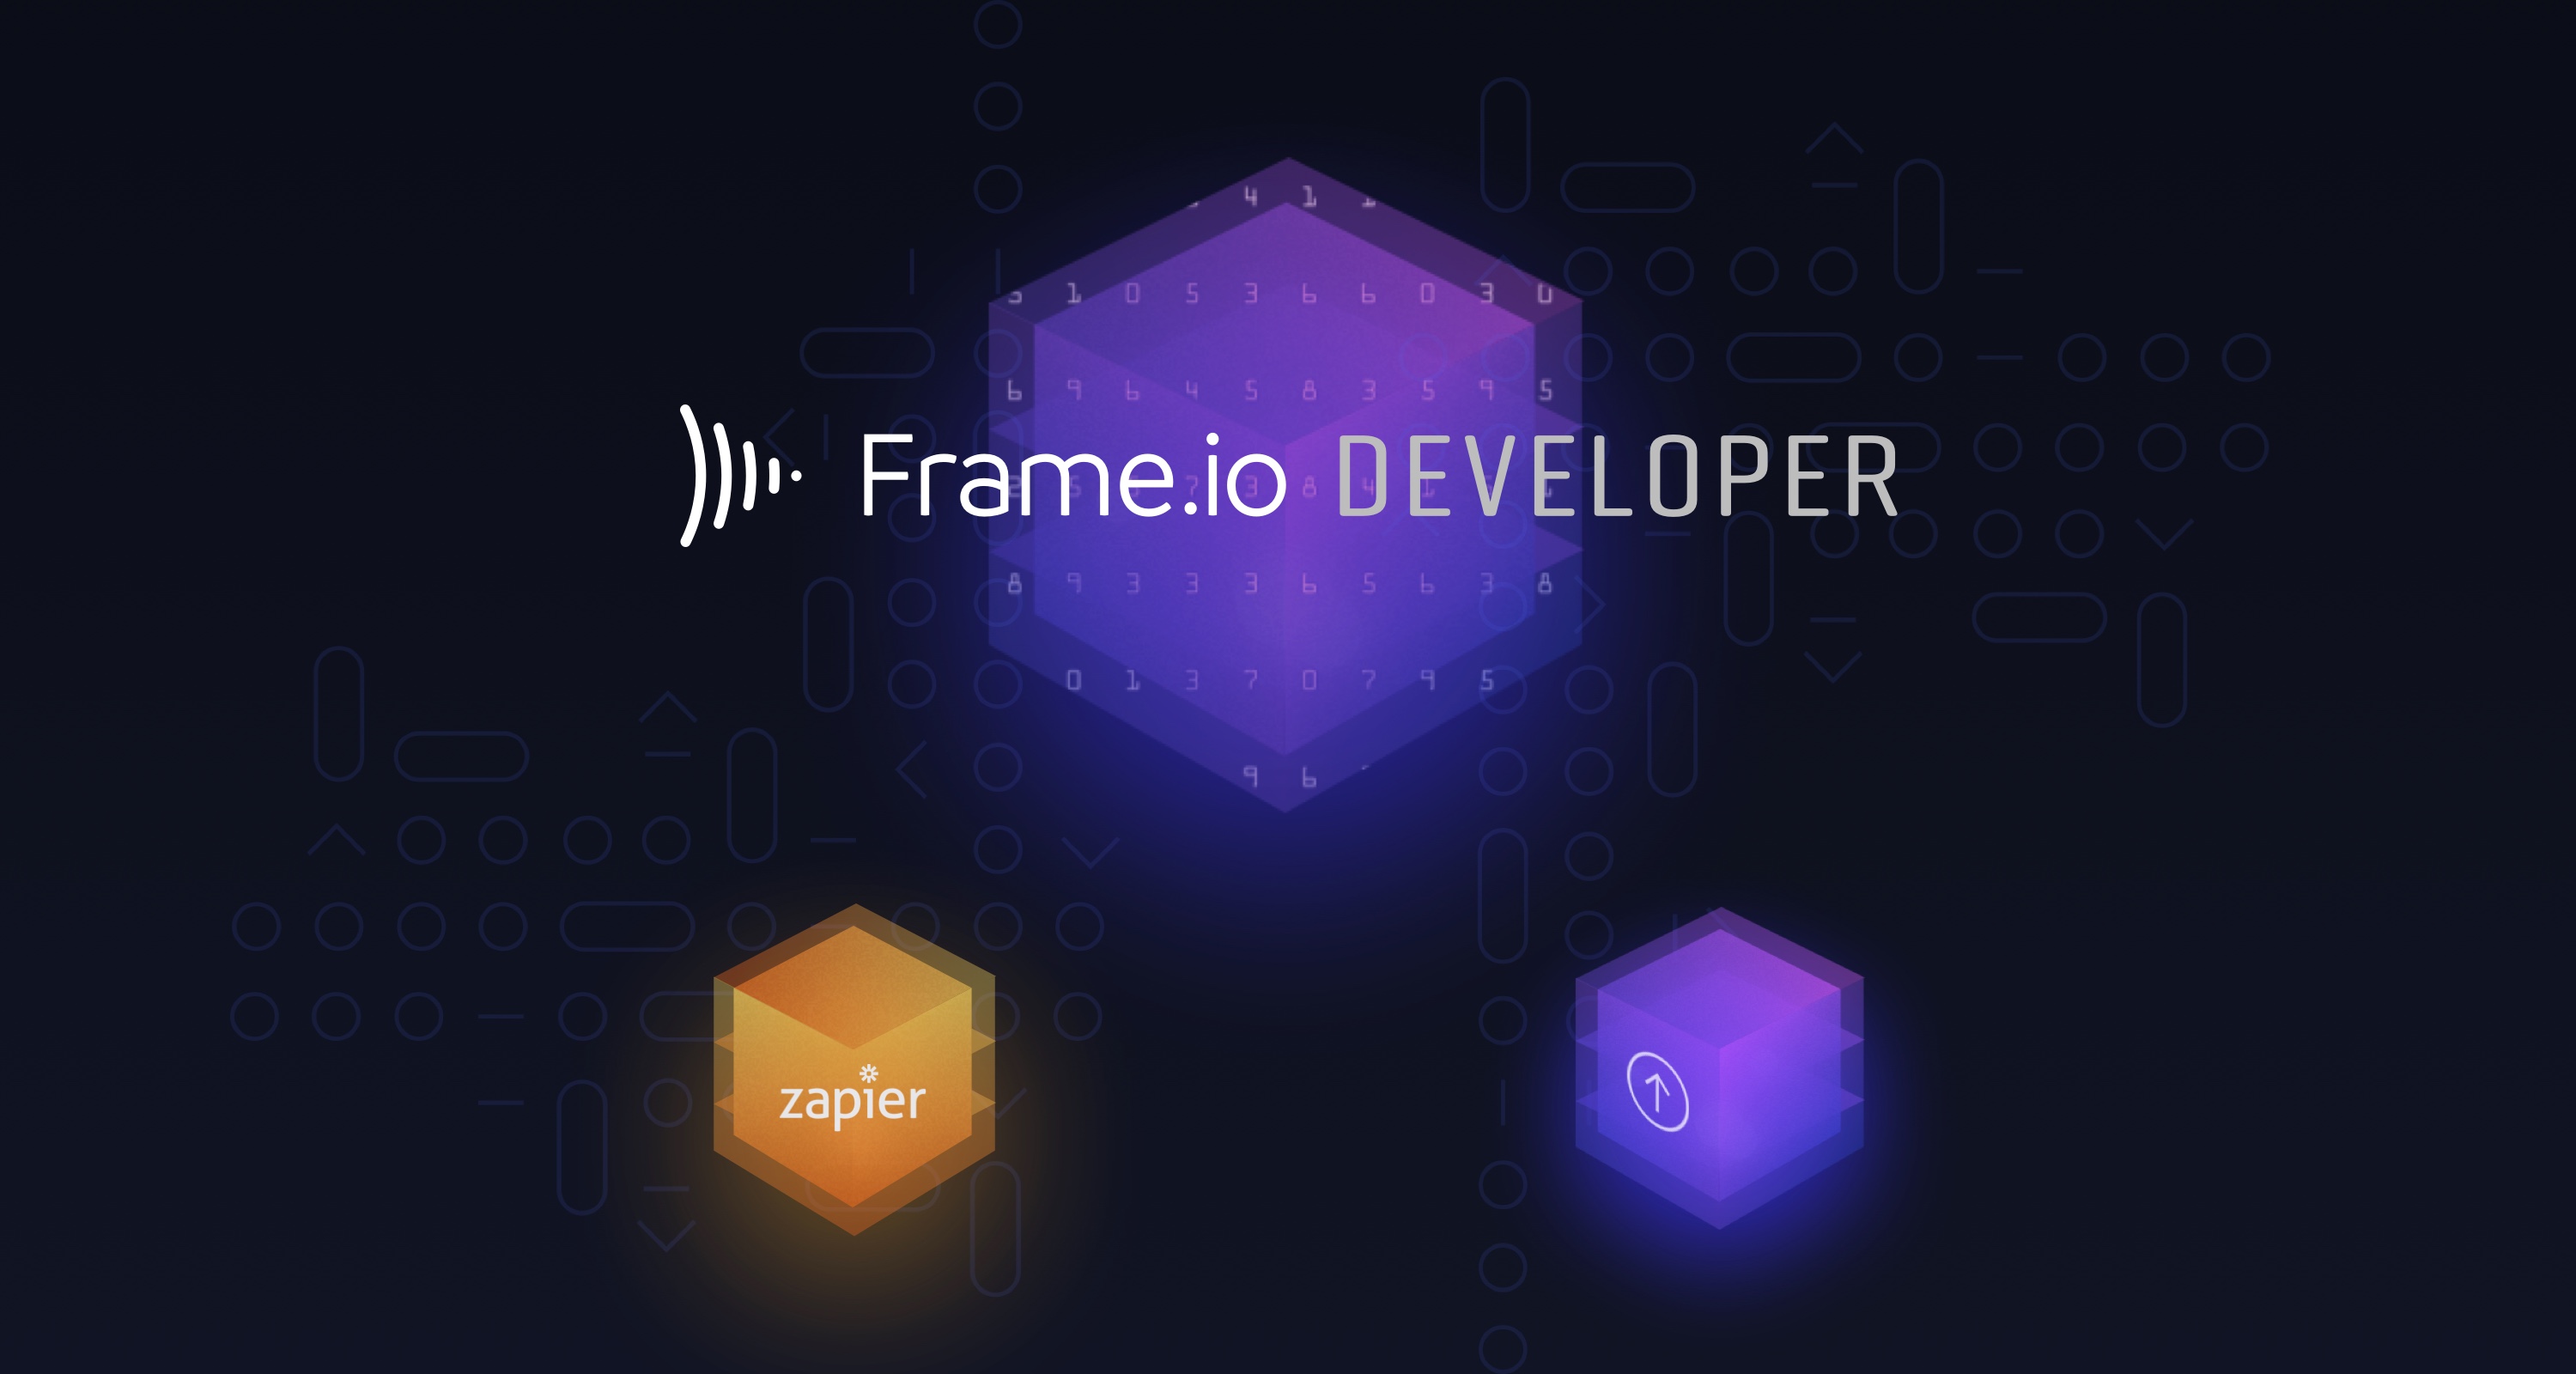 Introducing the Frame.io Developer Platform with Zapier Integration